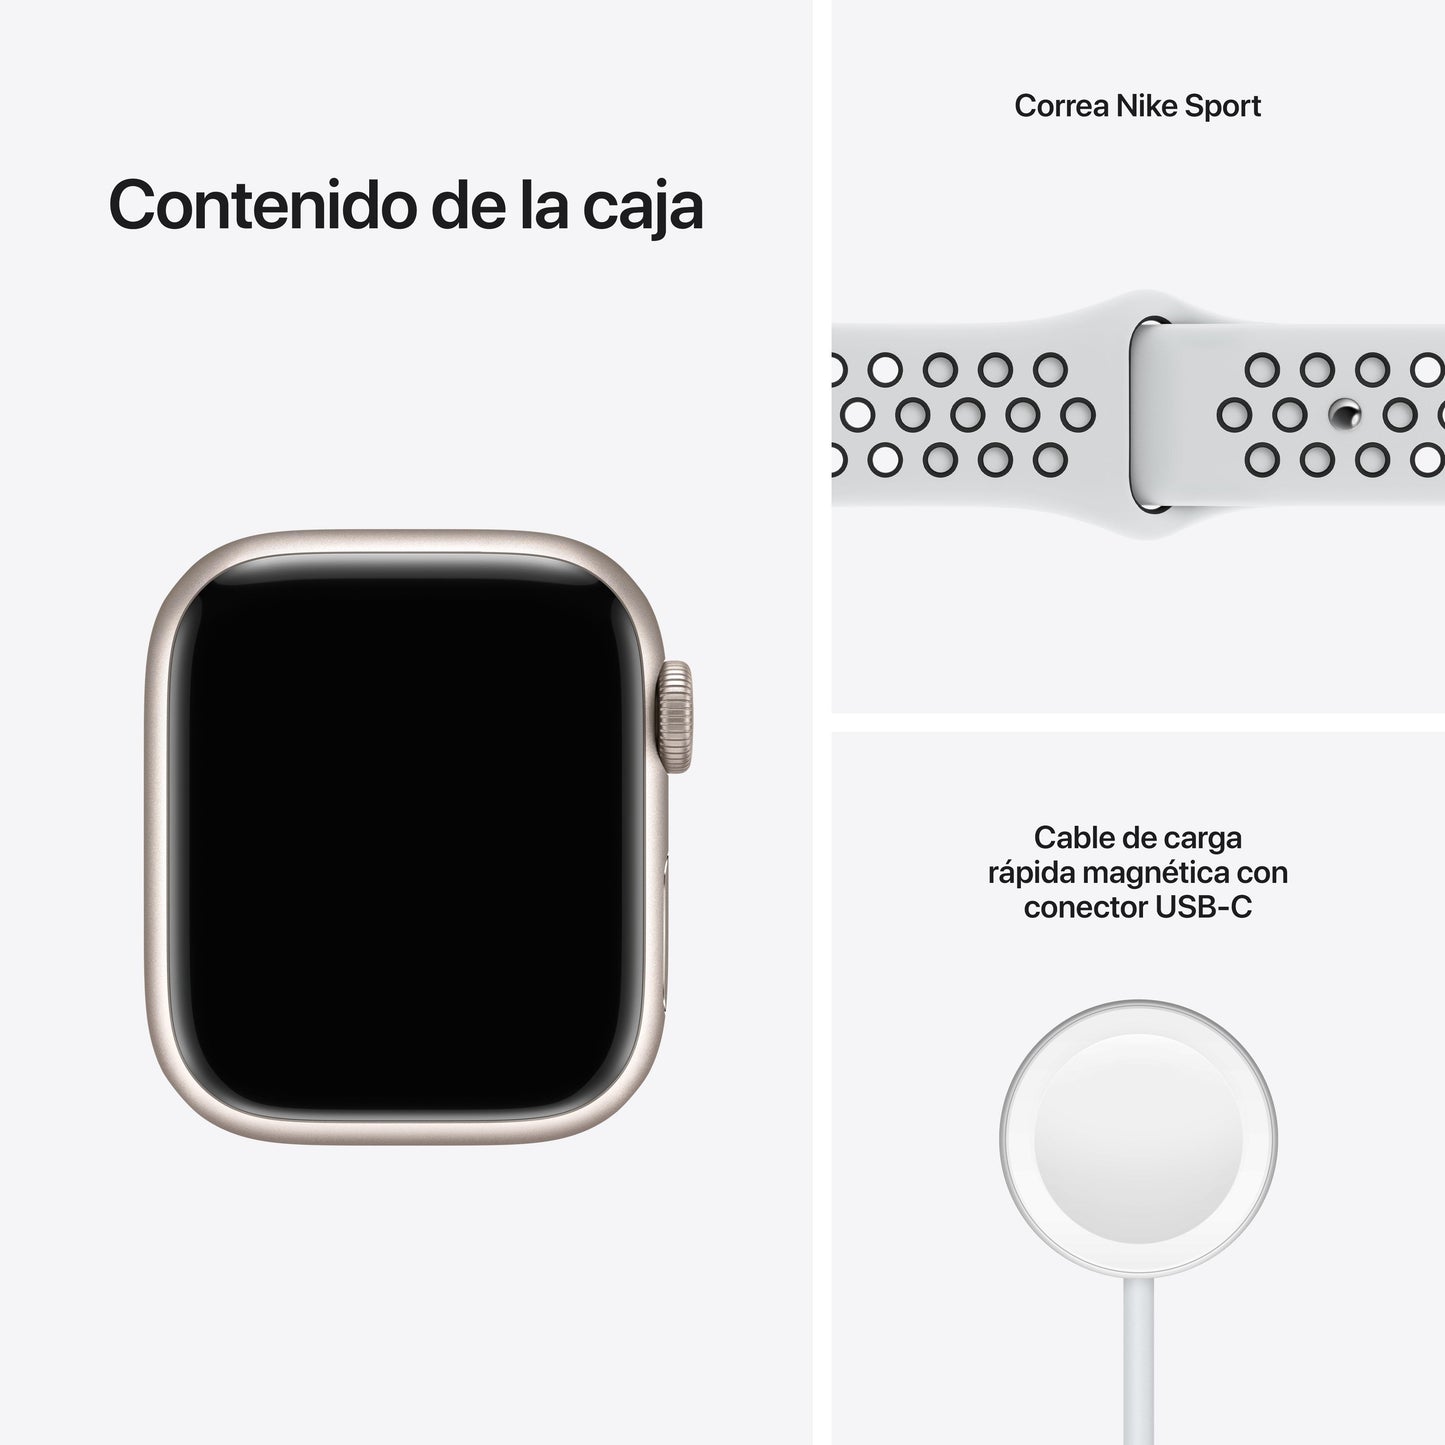 Apple Watch Nike Series 7 (GPS + Cellular) - Caja de aluminio en blanco estrella de 41 mm - Correa Nike Sport platino puro/negro - Talla única